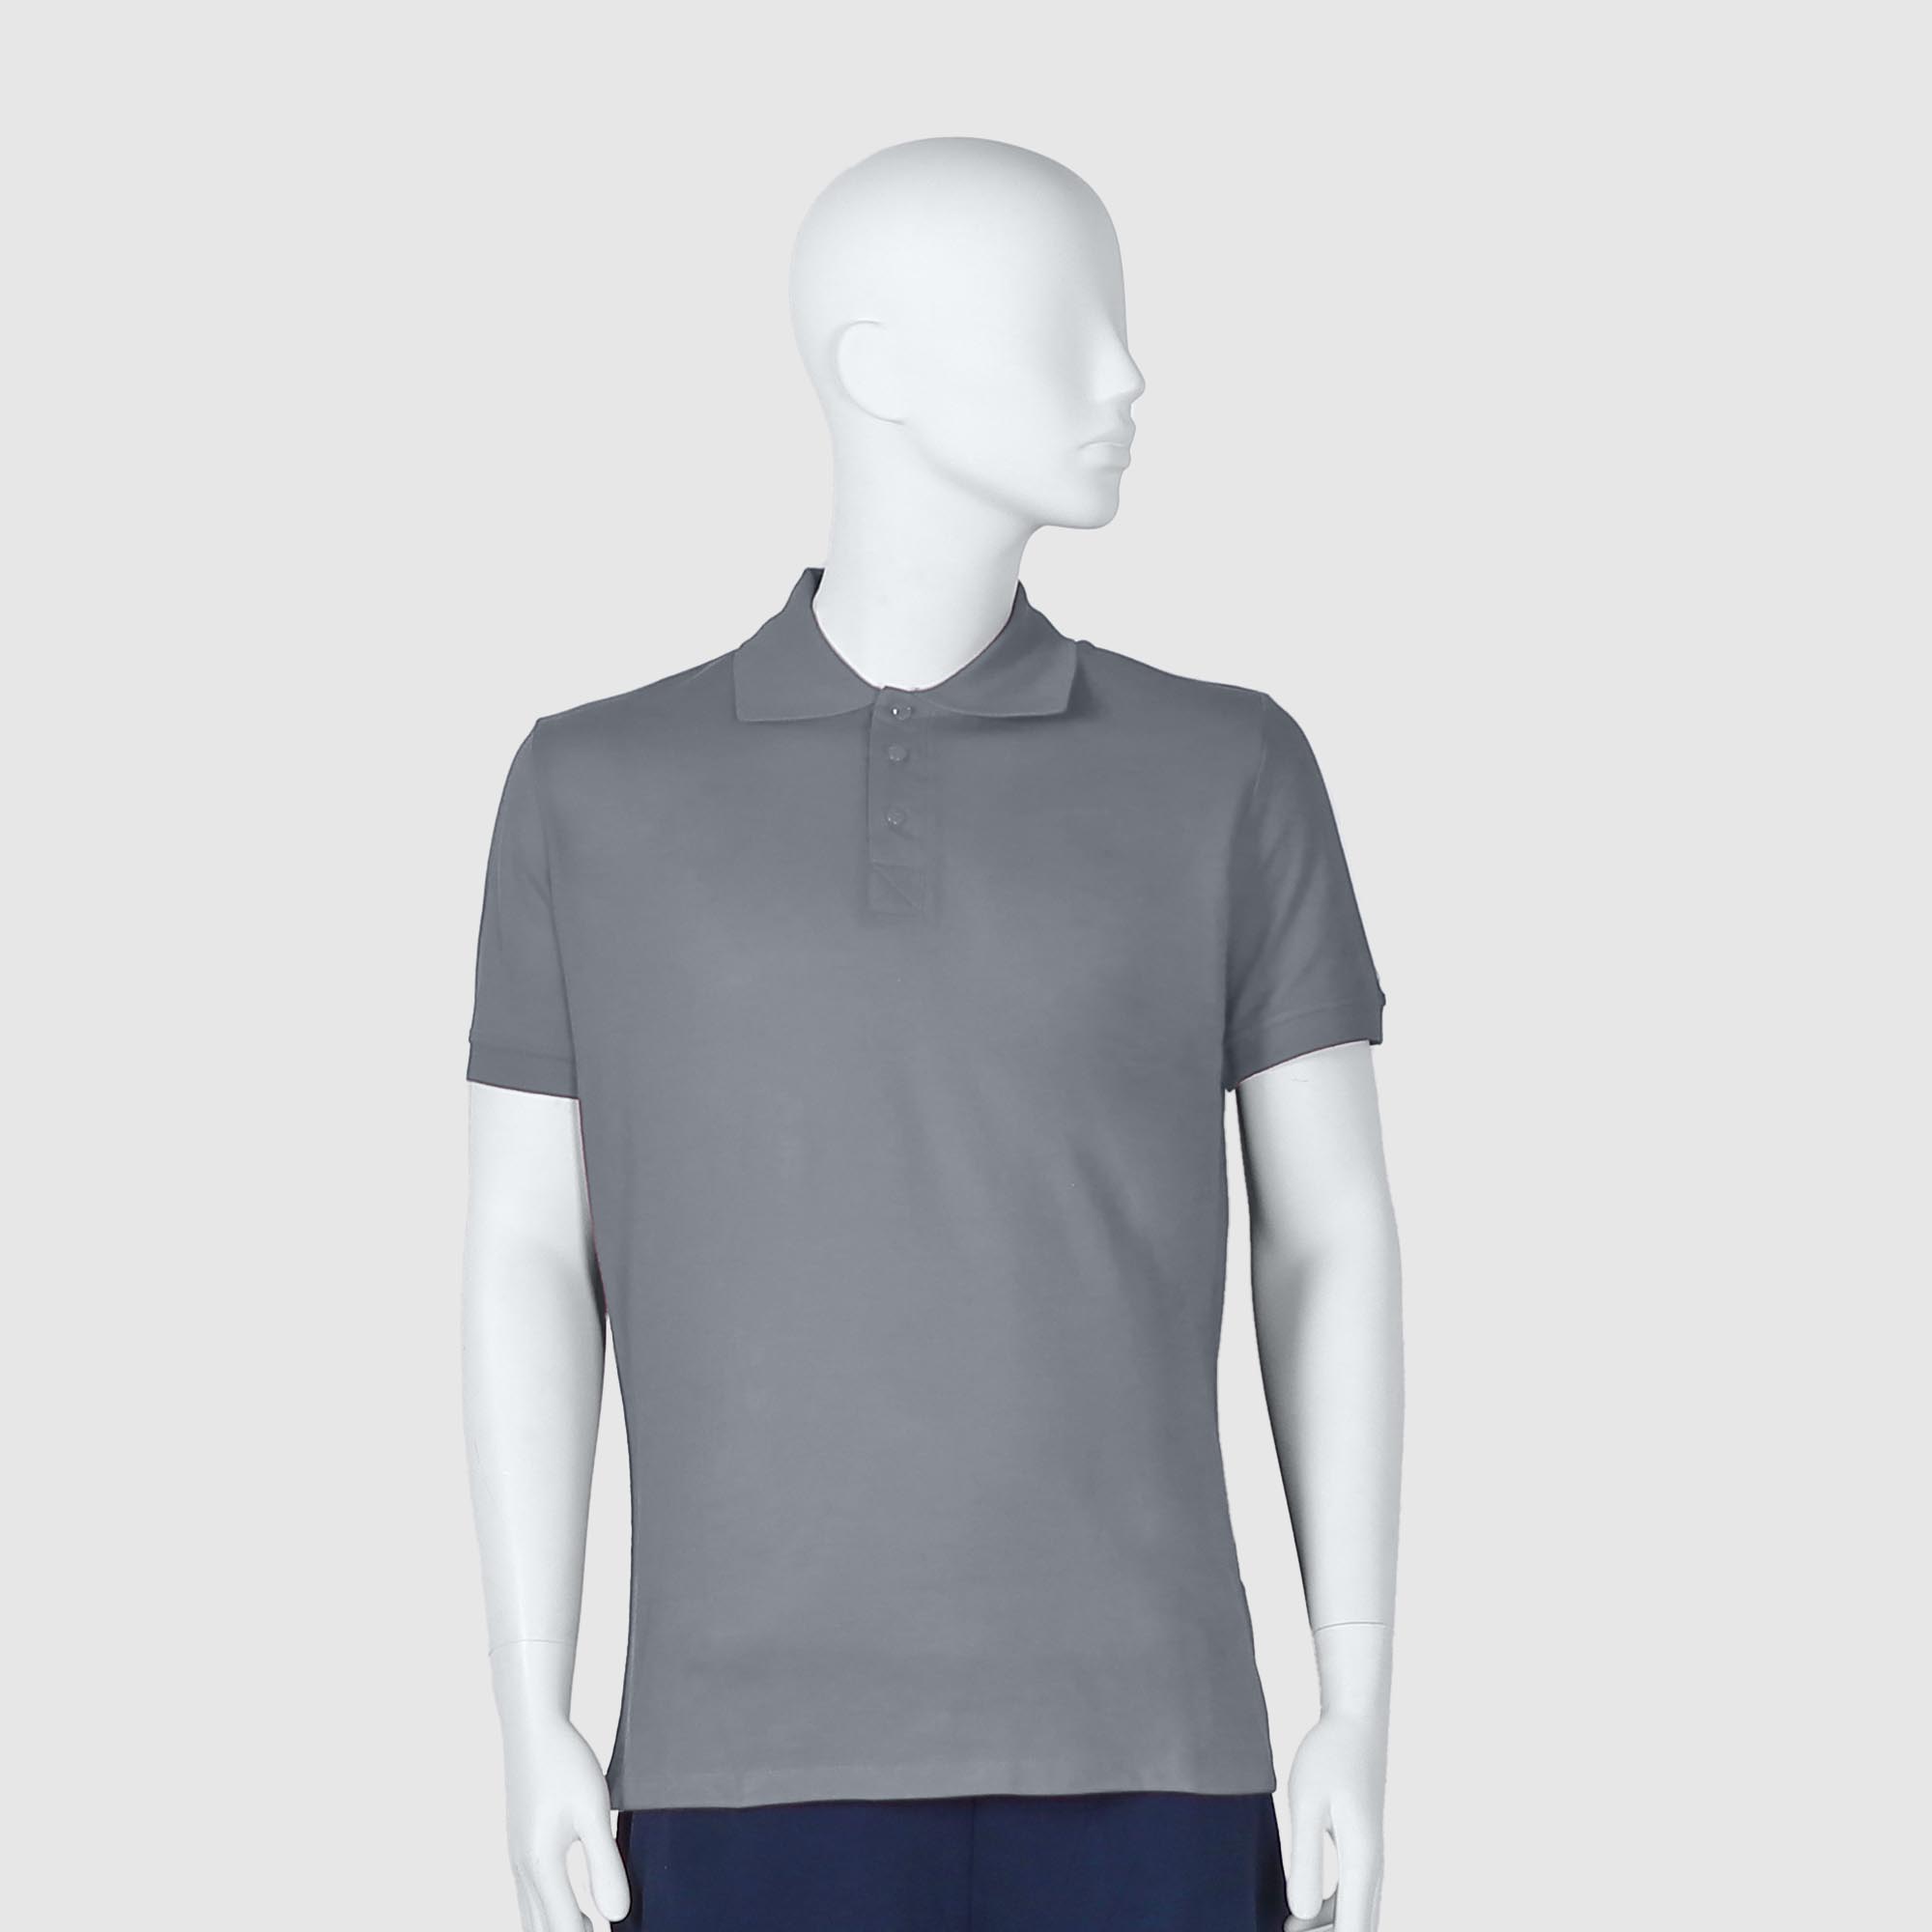 Мужская футболка-поло Diva Teks серая (DTD-11), цвет серый, размер 52-54